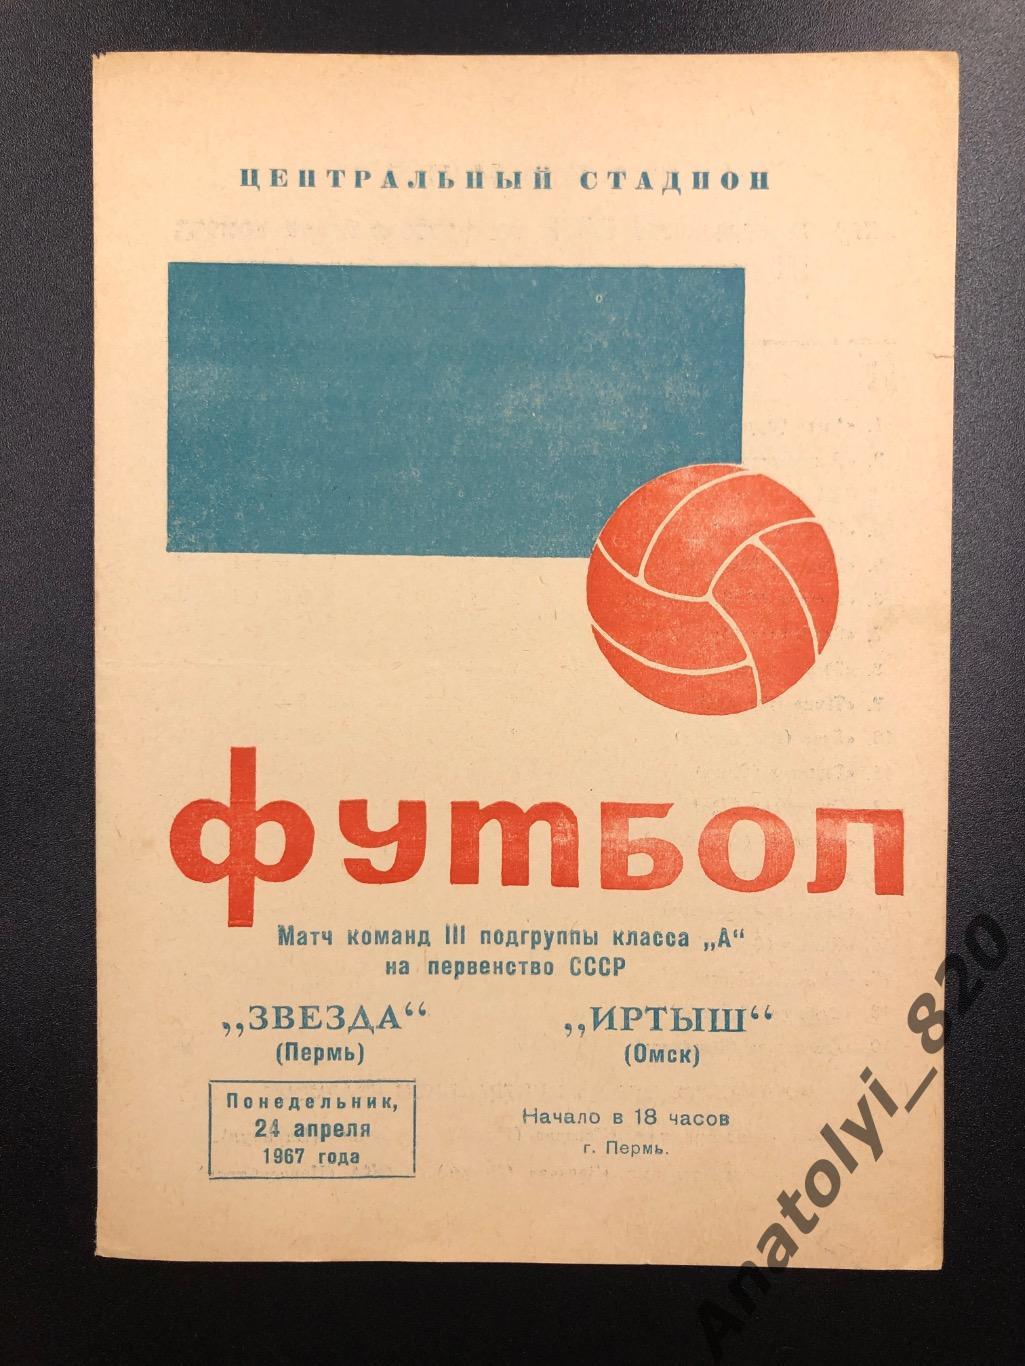 Звезда Пермь - Иртыш Омск, 24.04.1967